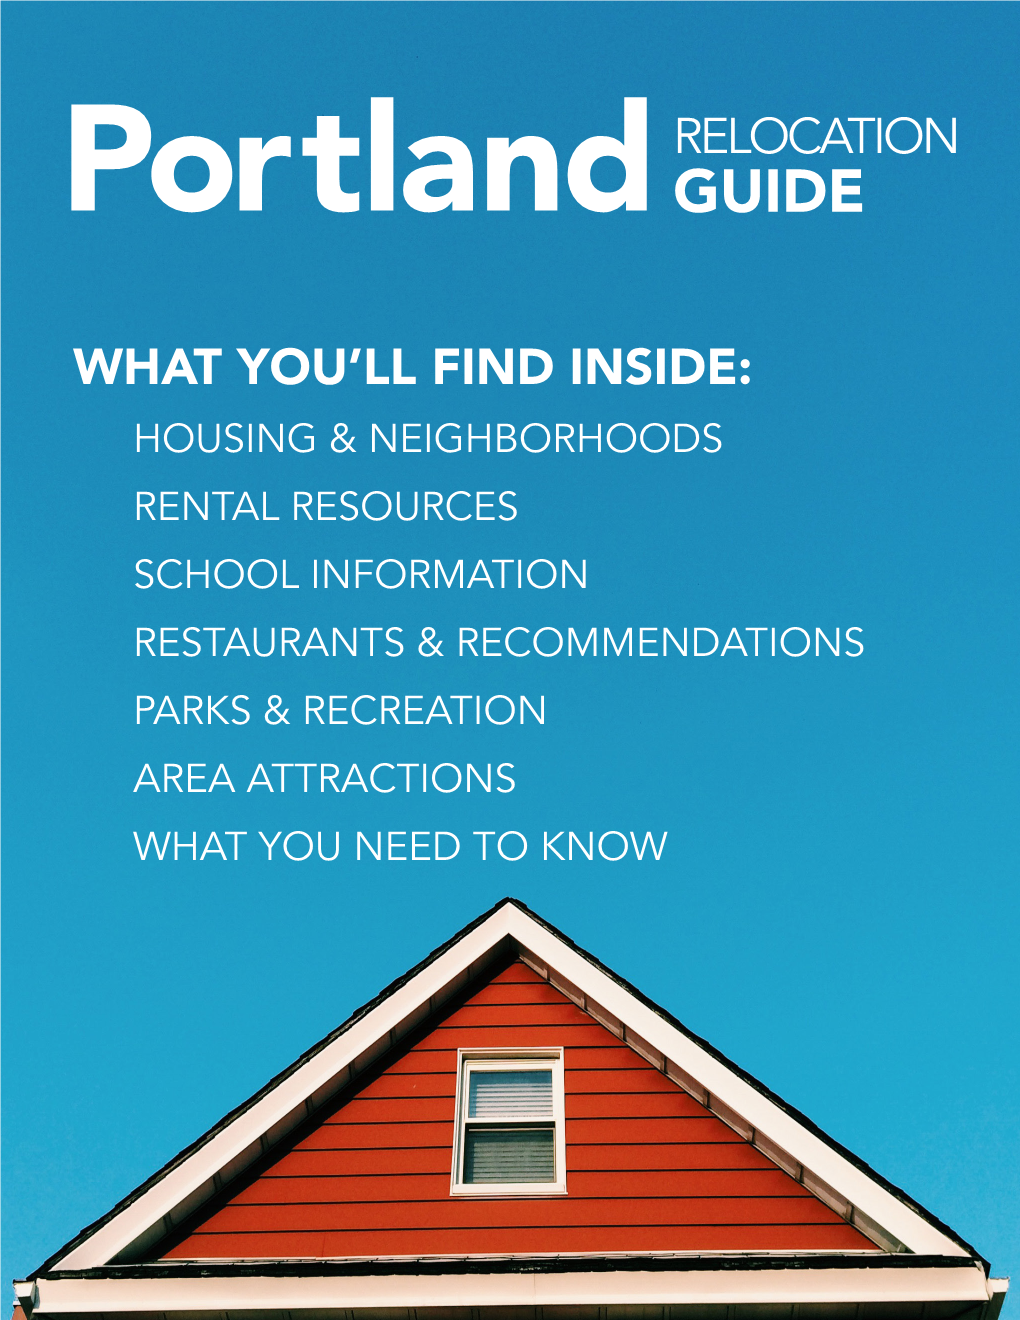 Portlandrelocation WHAT YOU'll FIND INSIDE